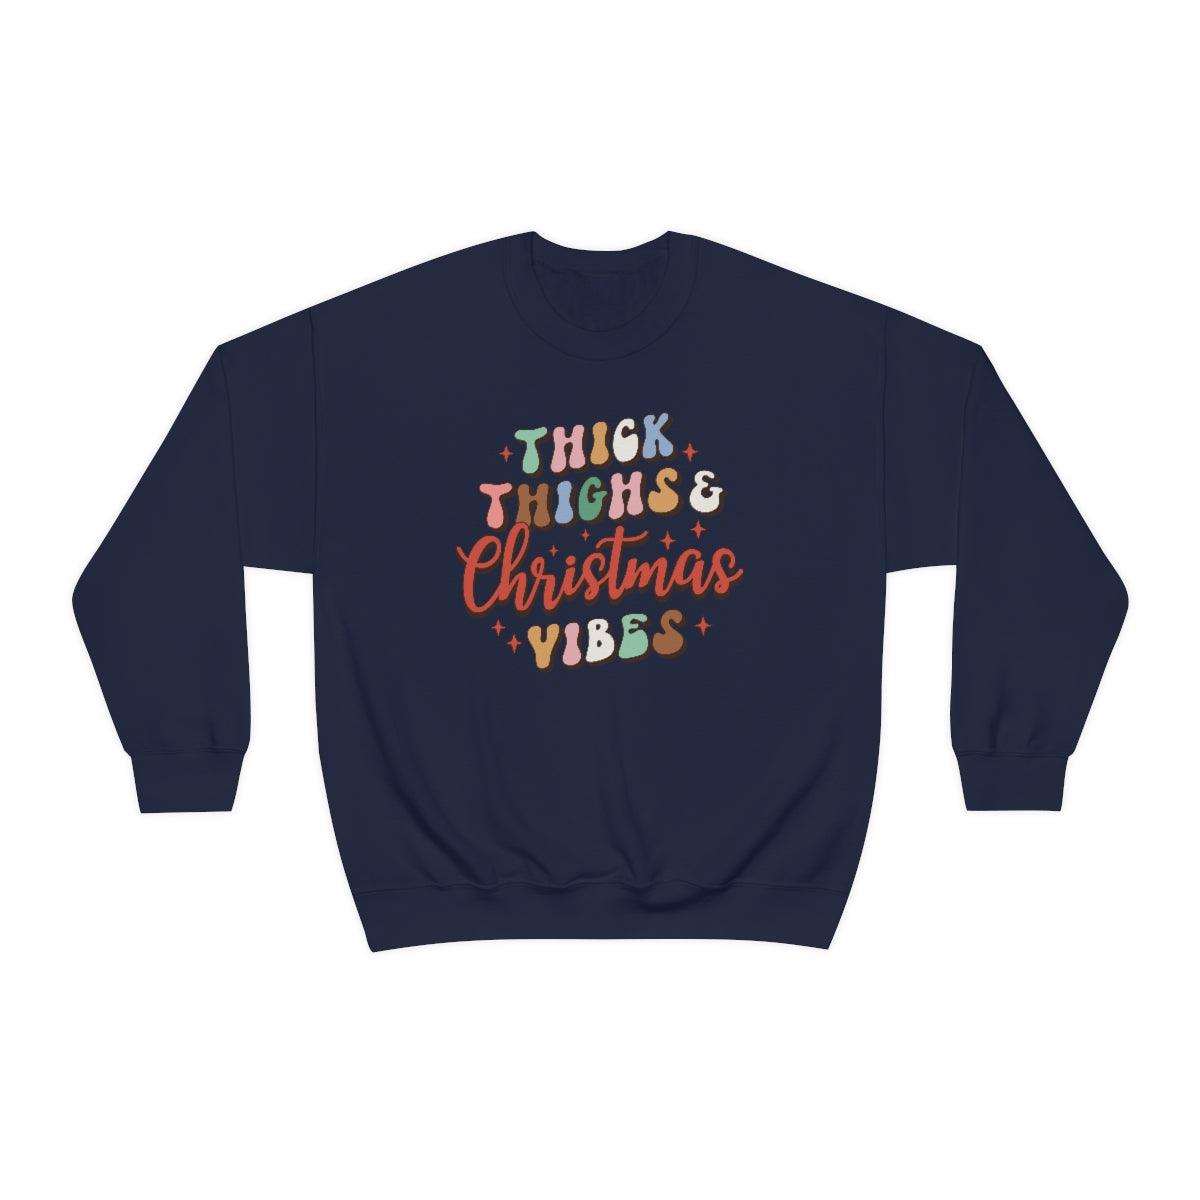 Retro Thick Thighs and Christmas Vibes Christmas Crewneck Sweater